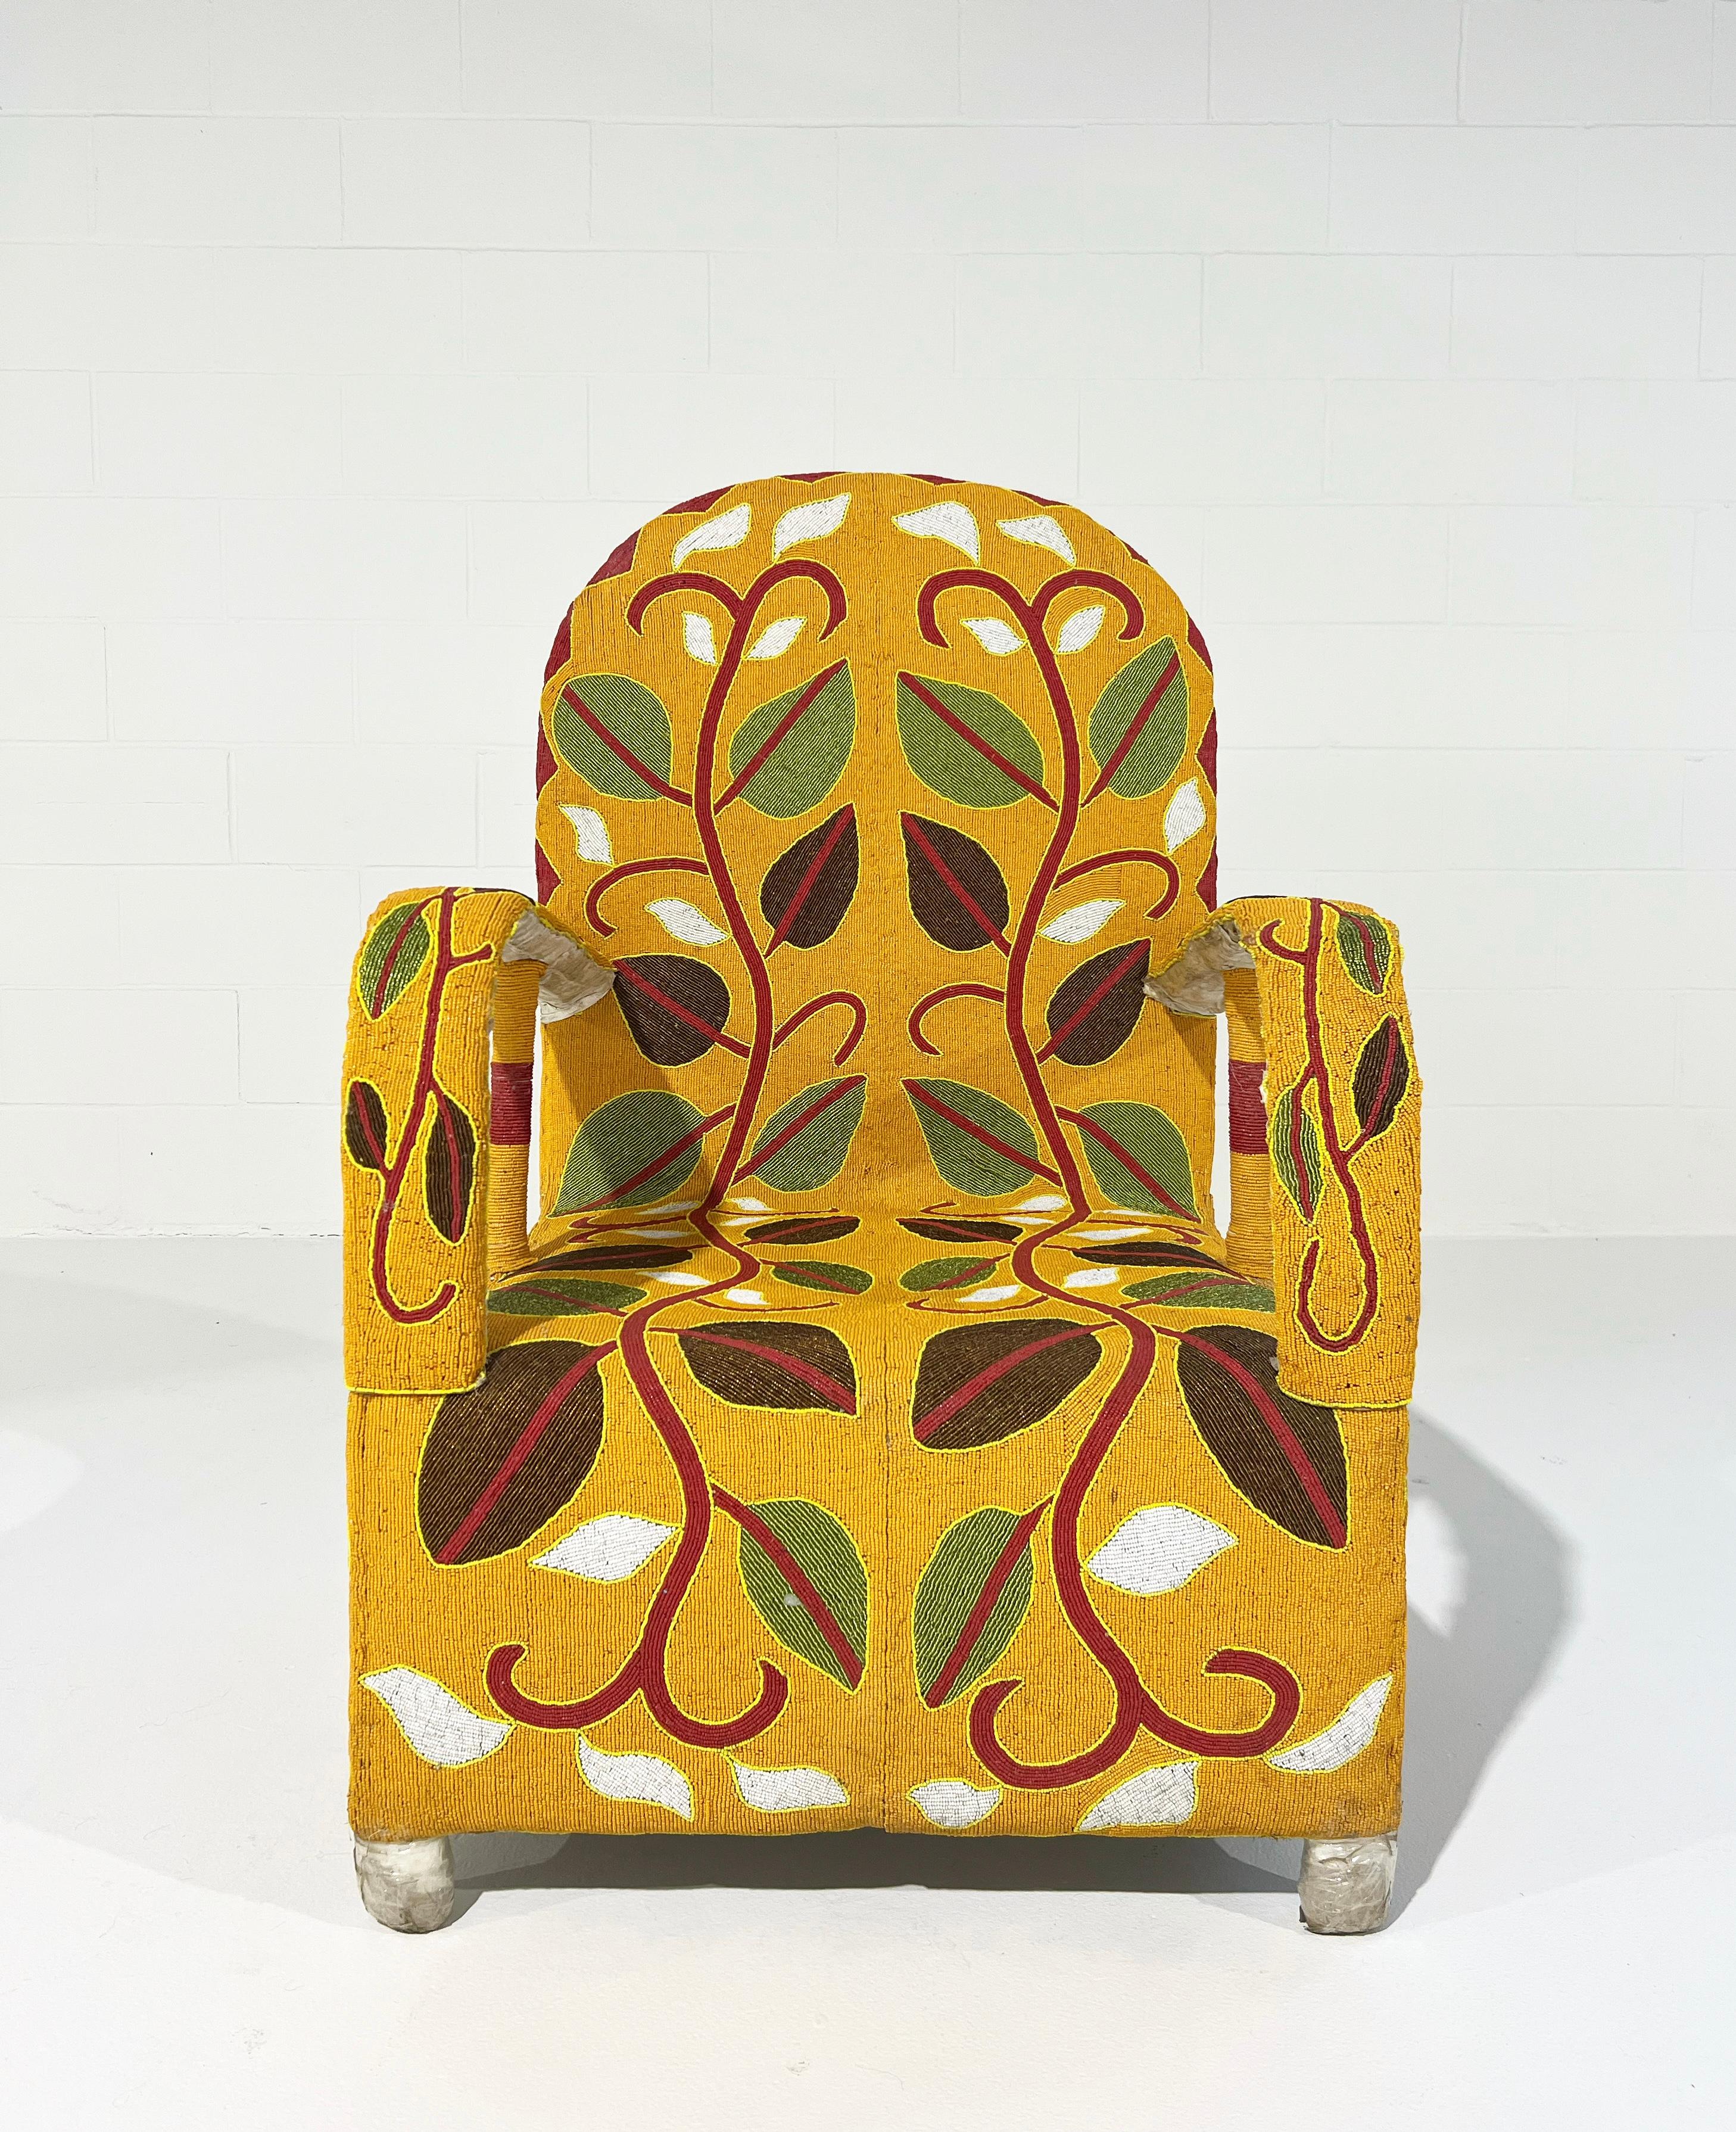 Afrikanischer Yoruba-Stuhl mit Perlen, mehrfarbig, 1 Stuhl verfügbar 1